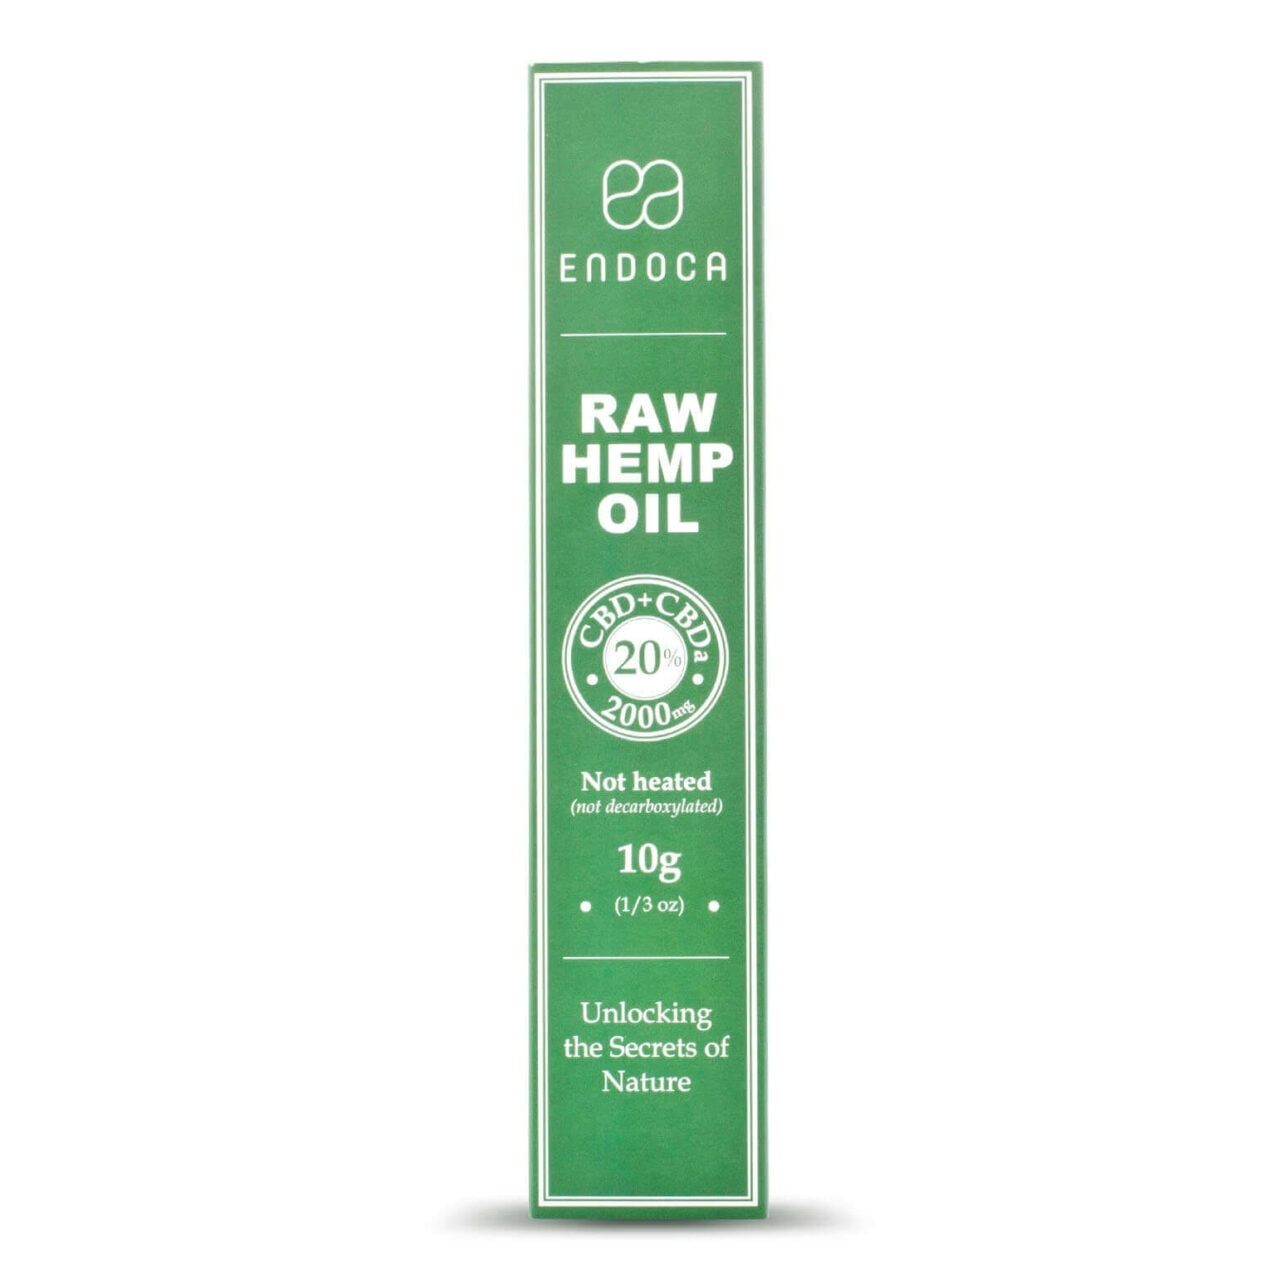 Endoca, Raw Hemp Oil Extract 20%, Full Spectrum, 0.33oz, 2000mg CBD+CBDA 1